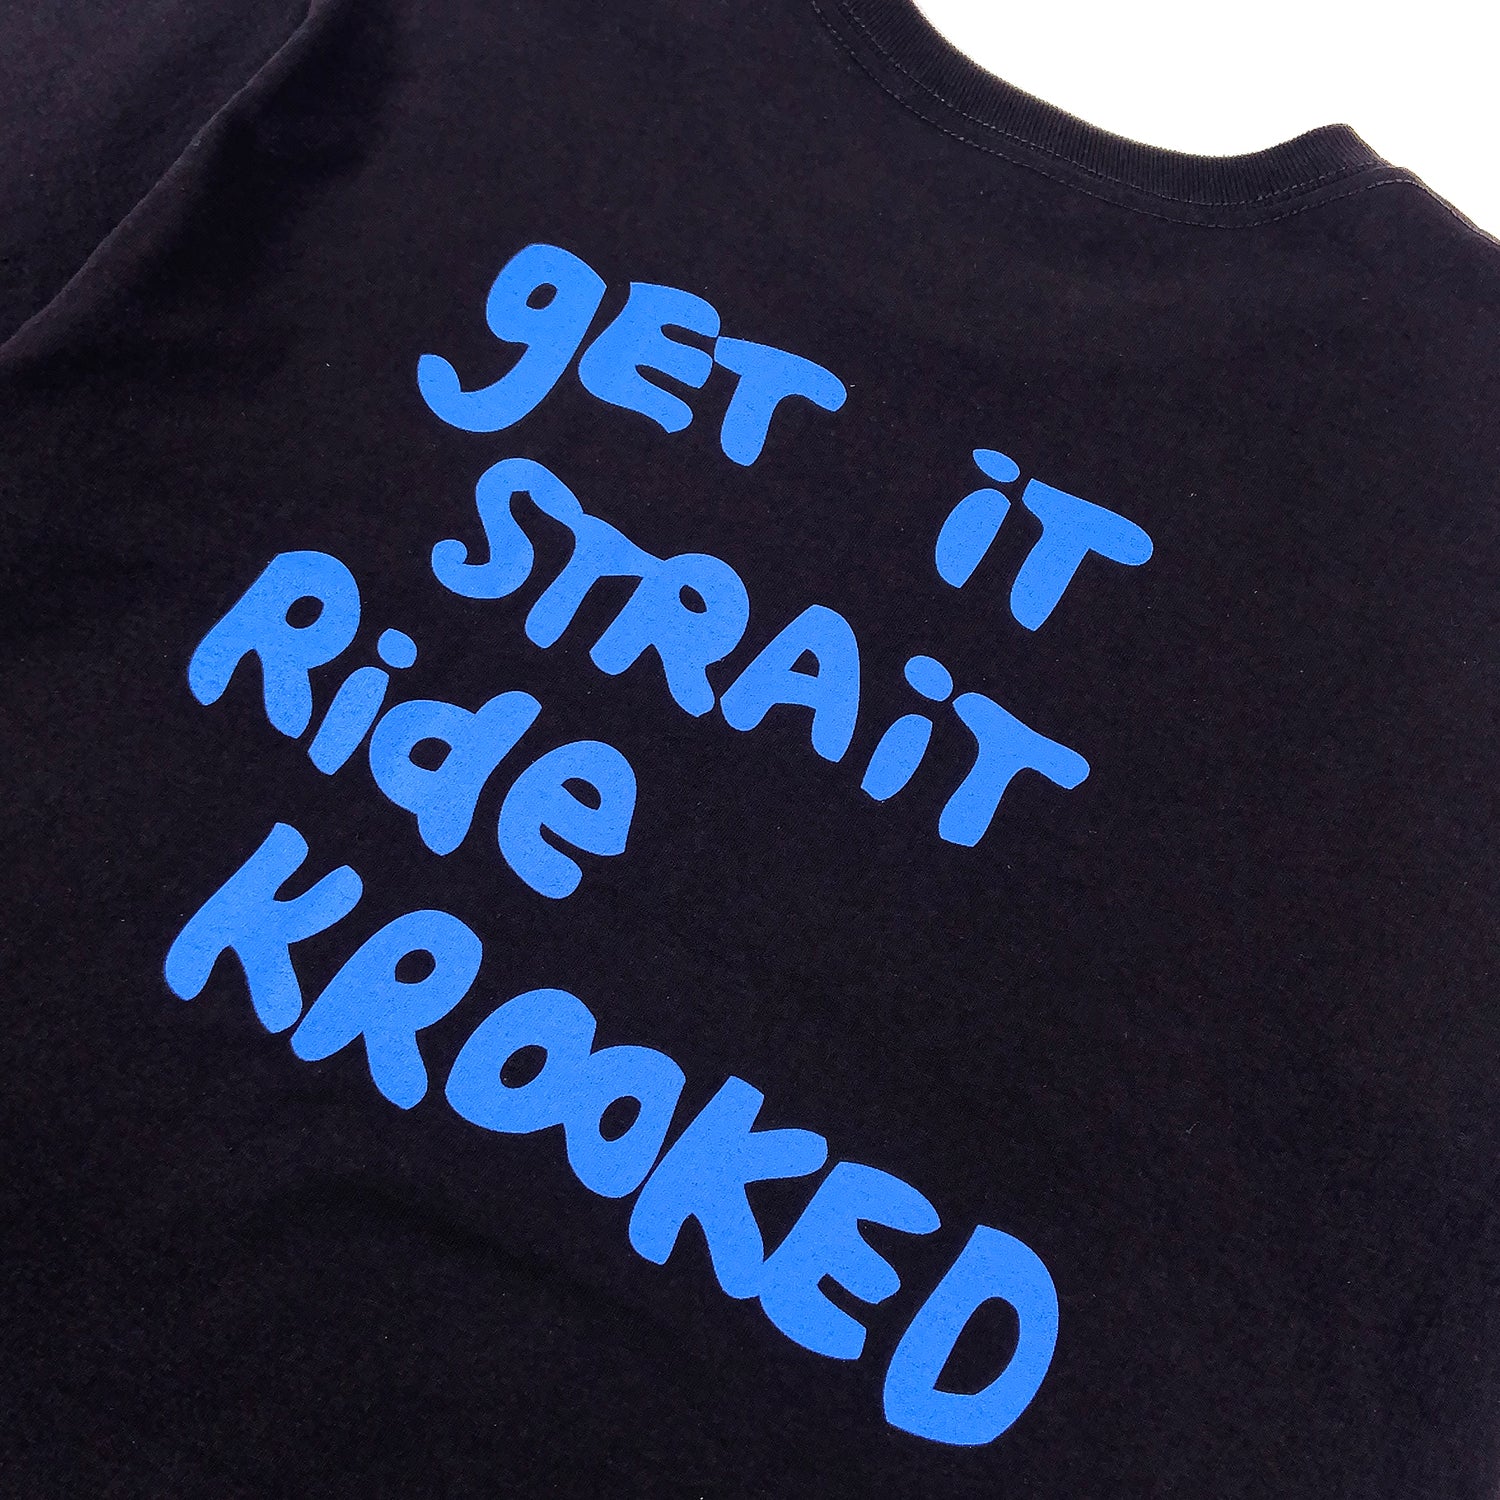 Krooked - Eyes Strait - T-shirt - Black - Prime Delux Store